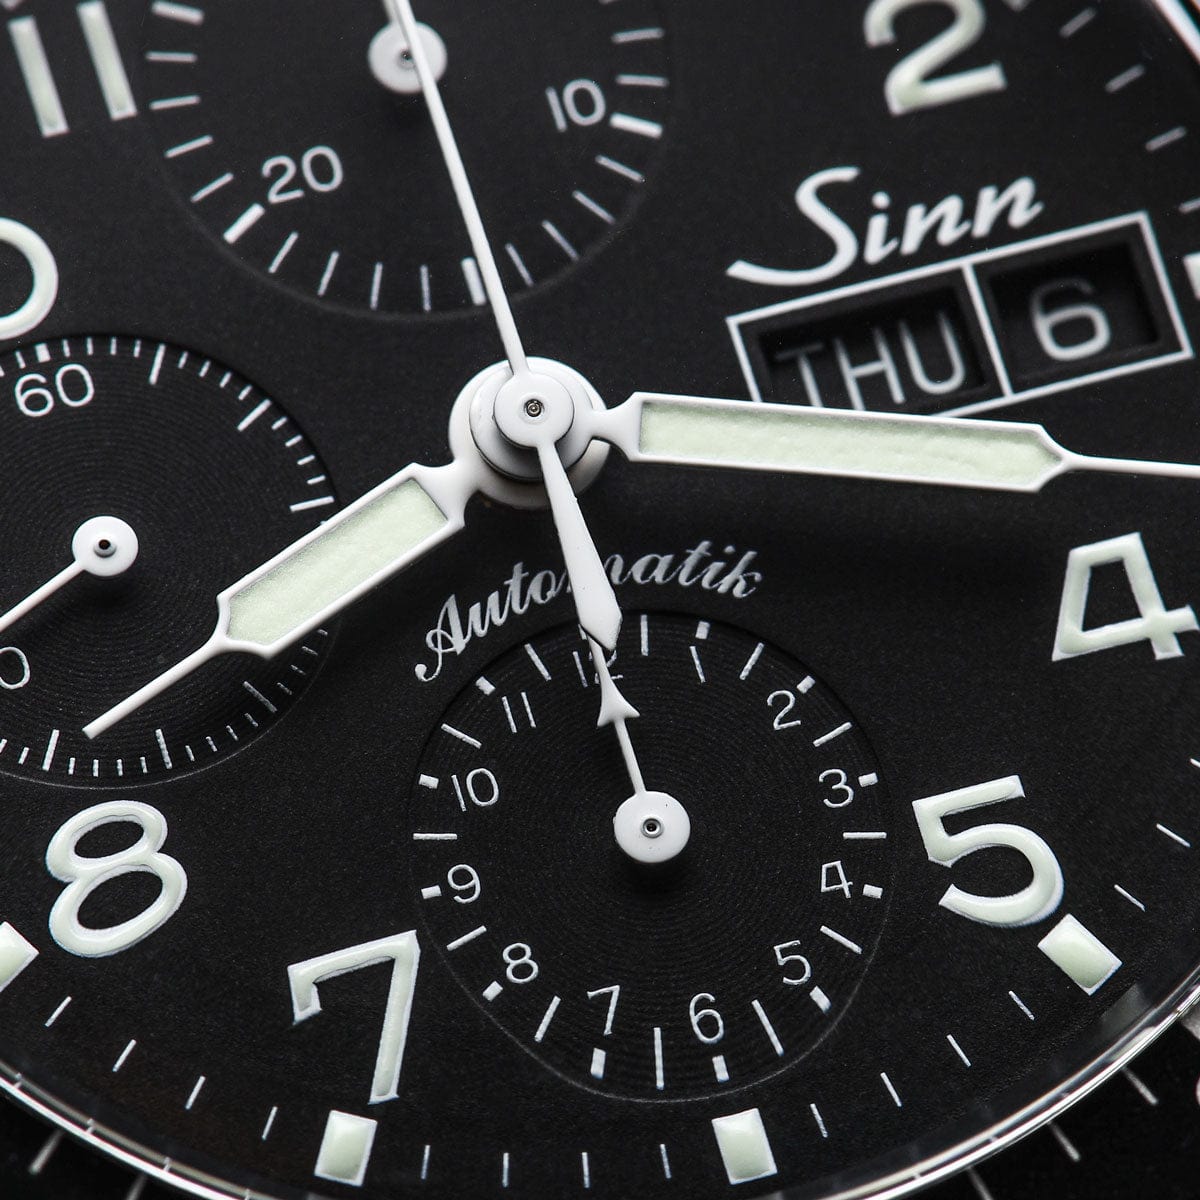 Sinn 103 St Pilot Chronograph Automatic Watch - Black Dial - Solid Bracelet - NEARLY NEW